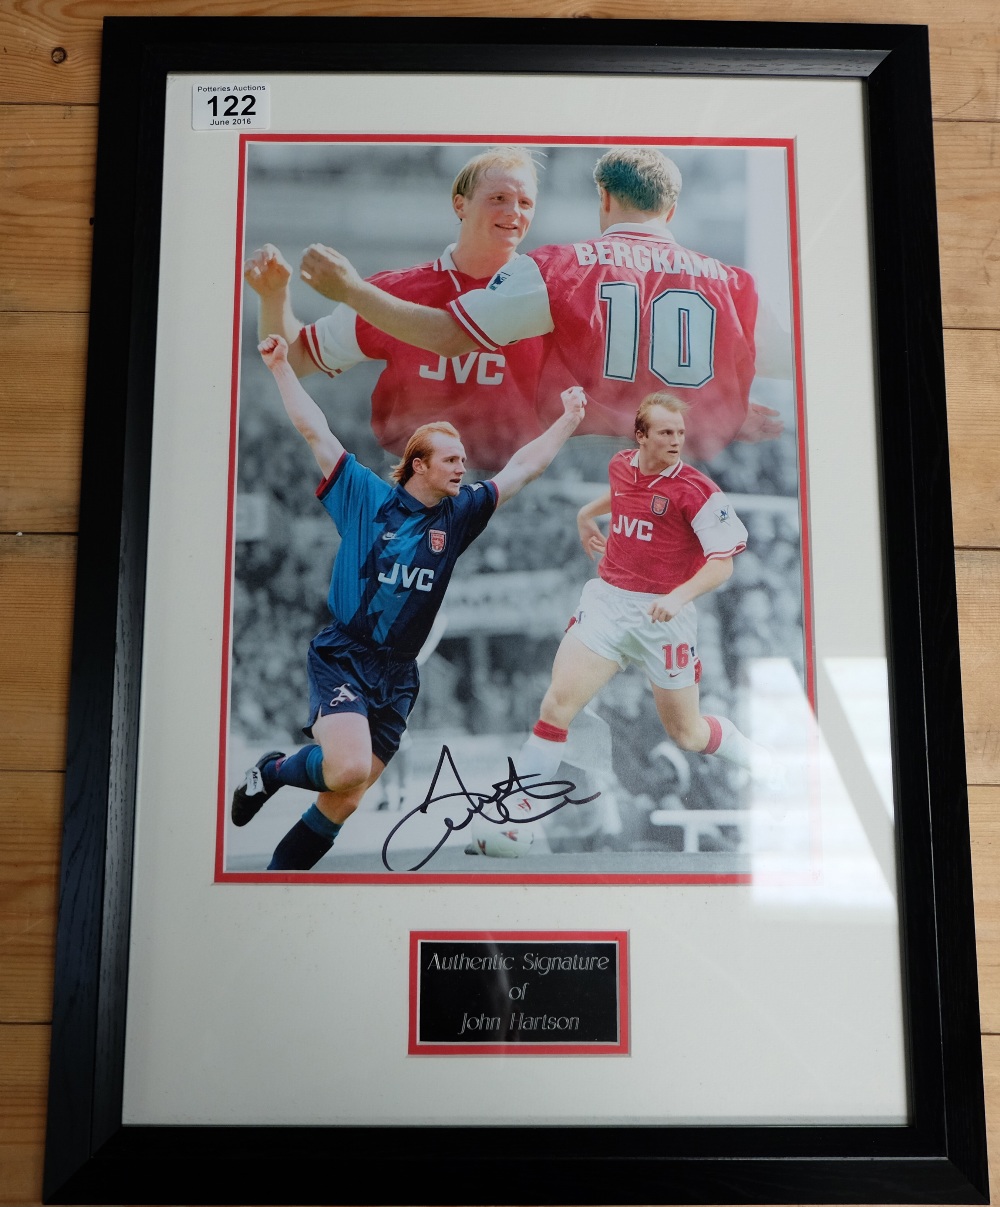 Signed presentation colour framed Photograph of footballer John Hartson (Arsenal and Wales)